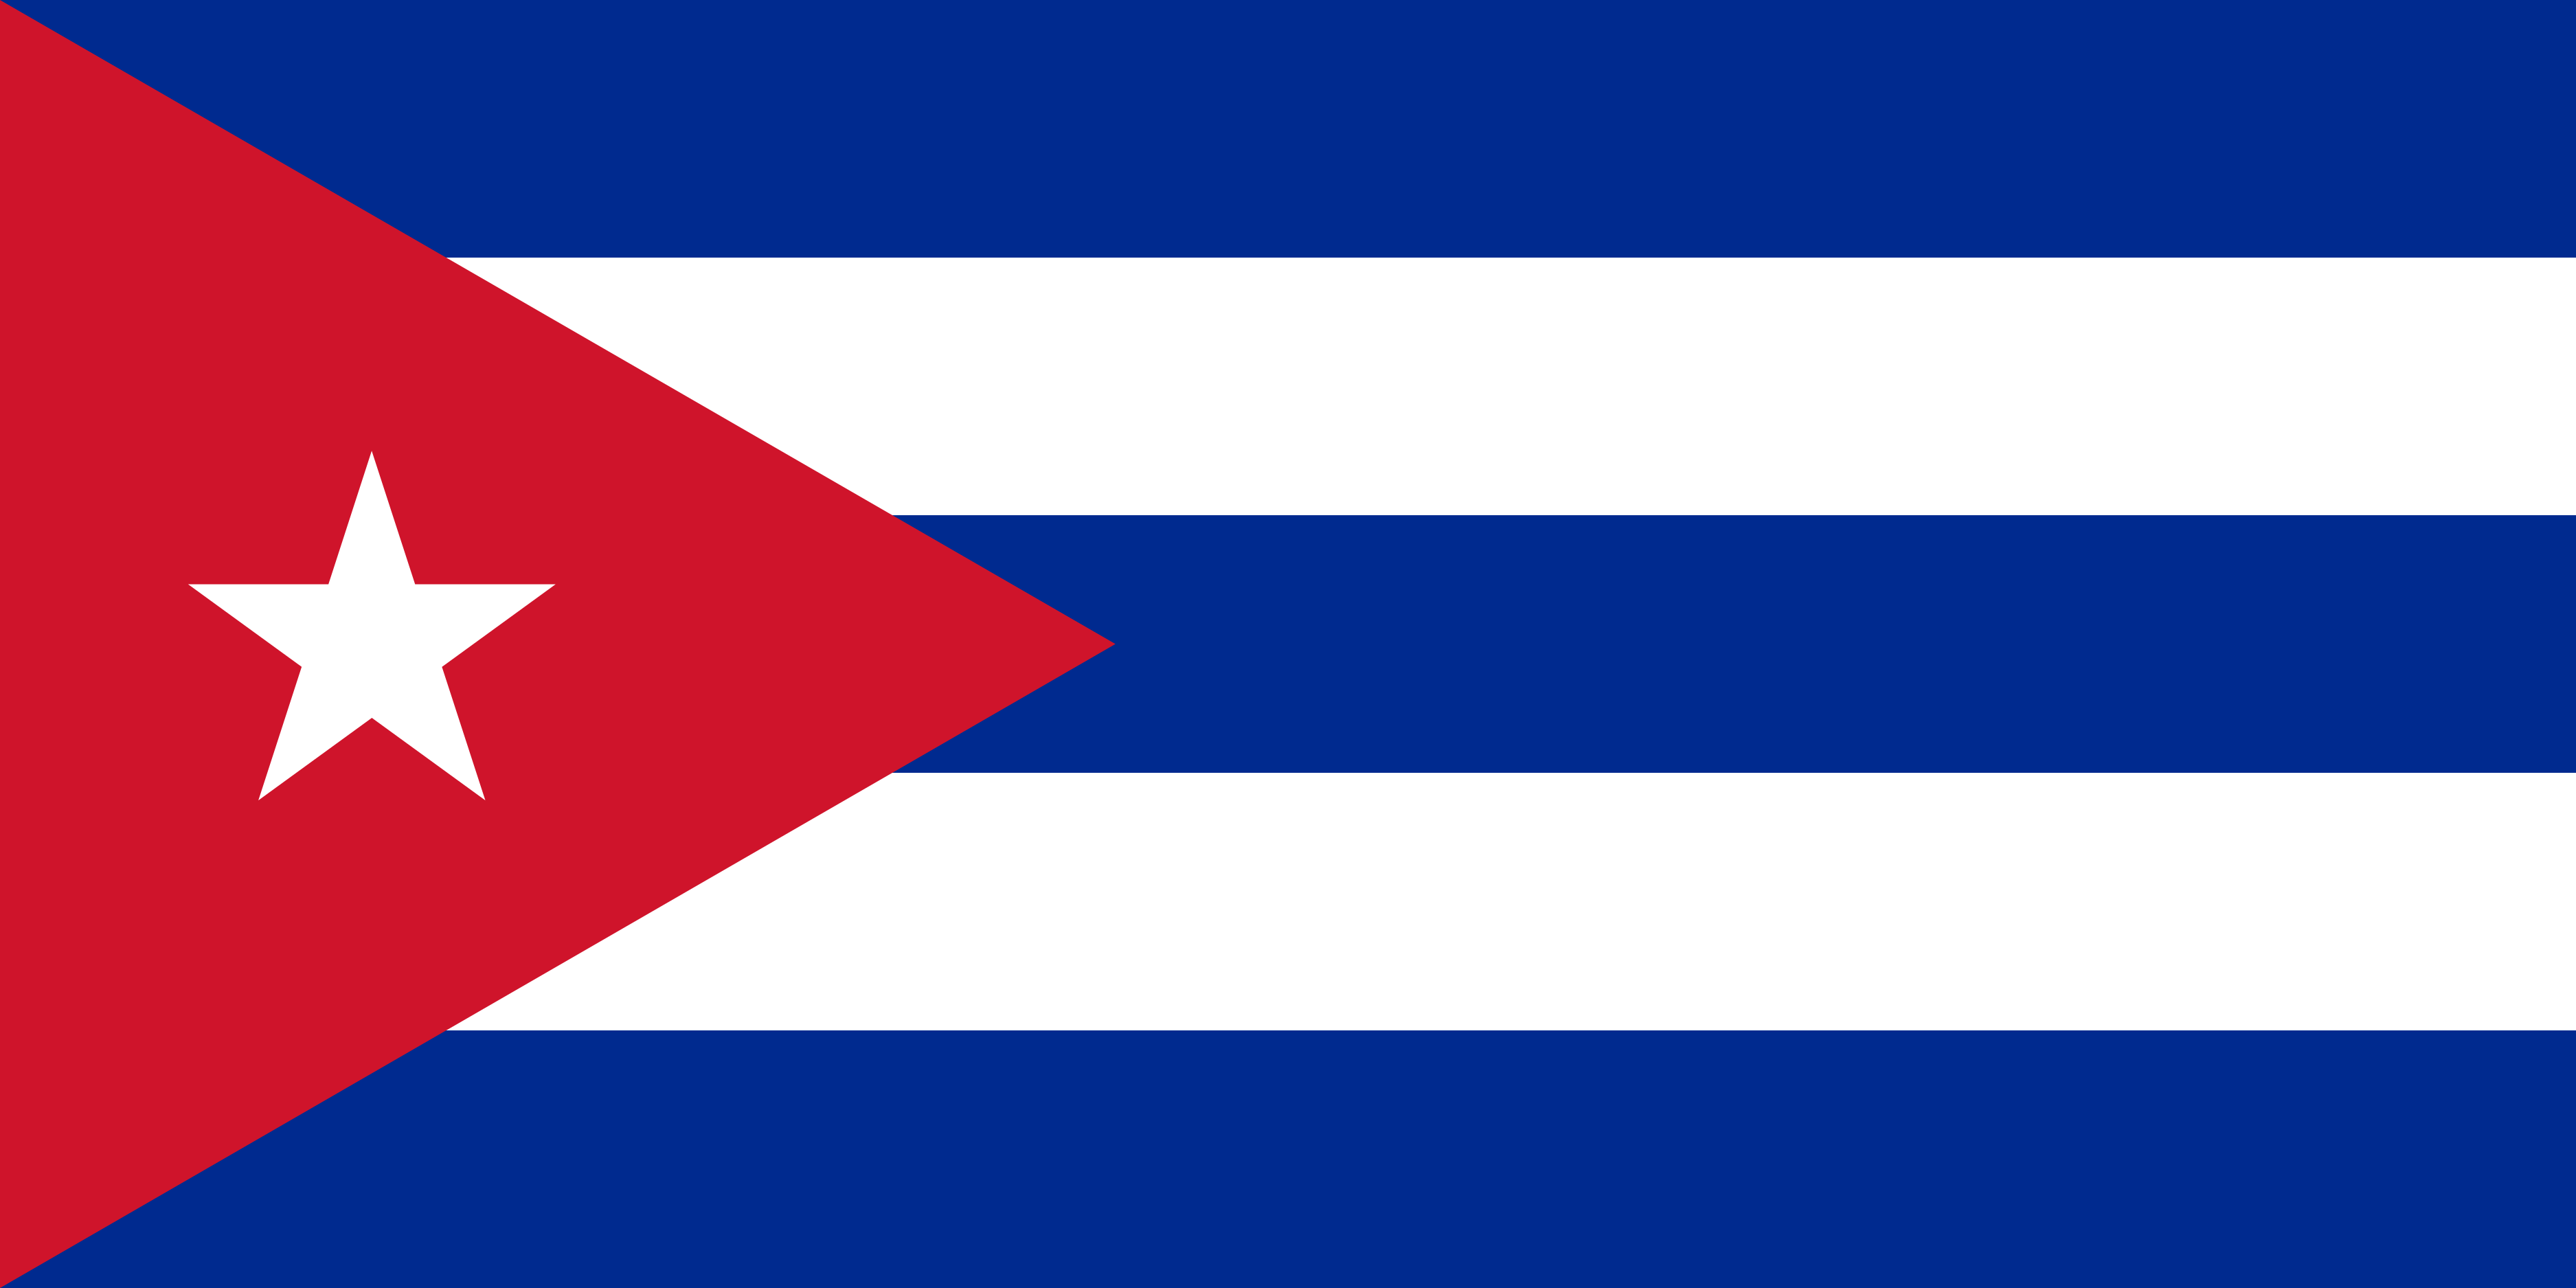 Free Cuba Flag Documents: PDF, DOC, DOCX, HTML & More!